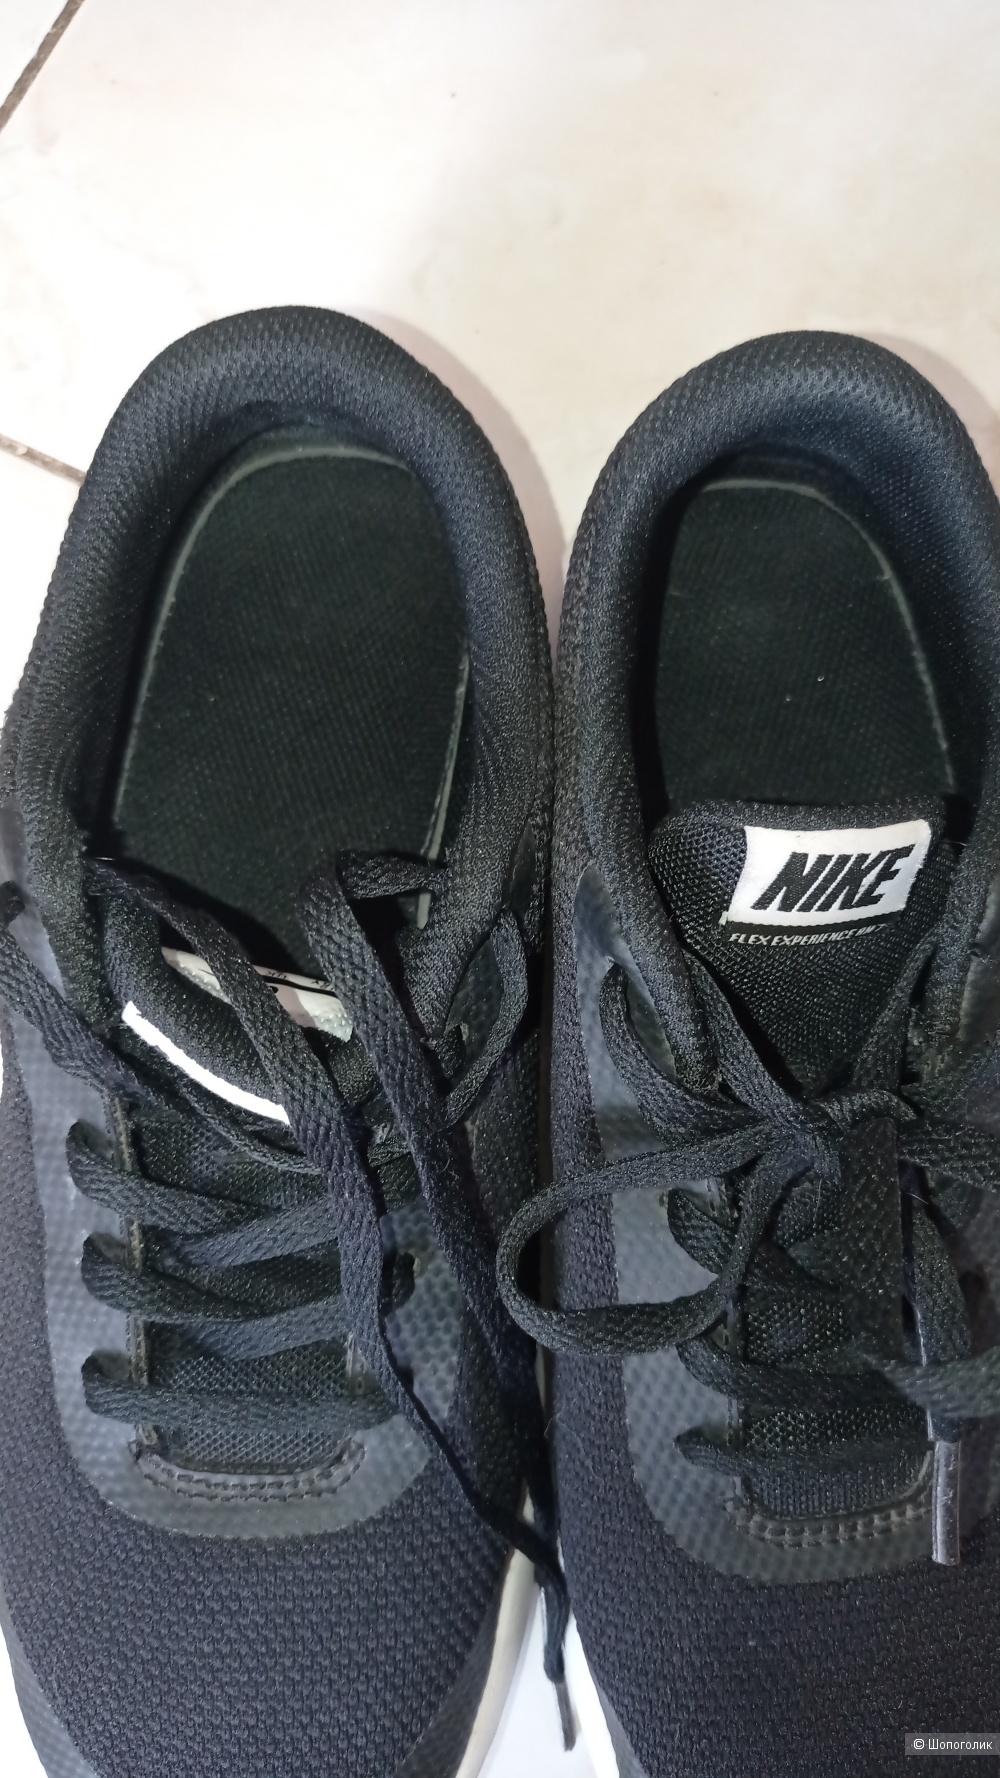 Кроссовки Nike Flex стелька до 24см